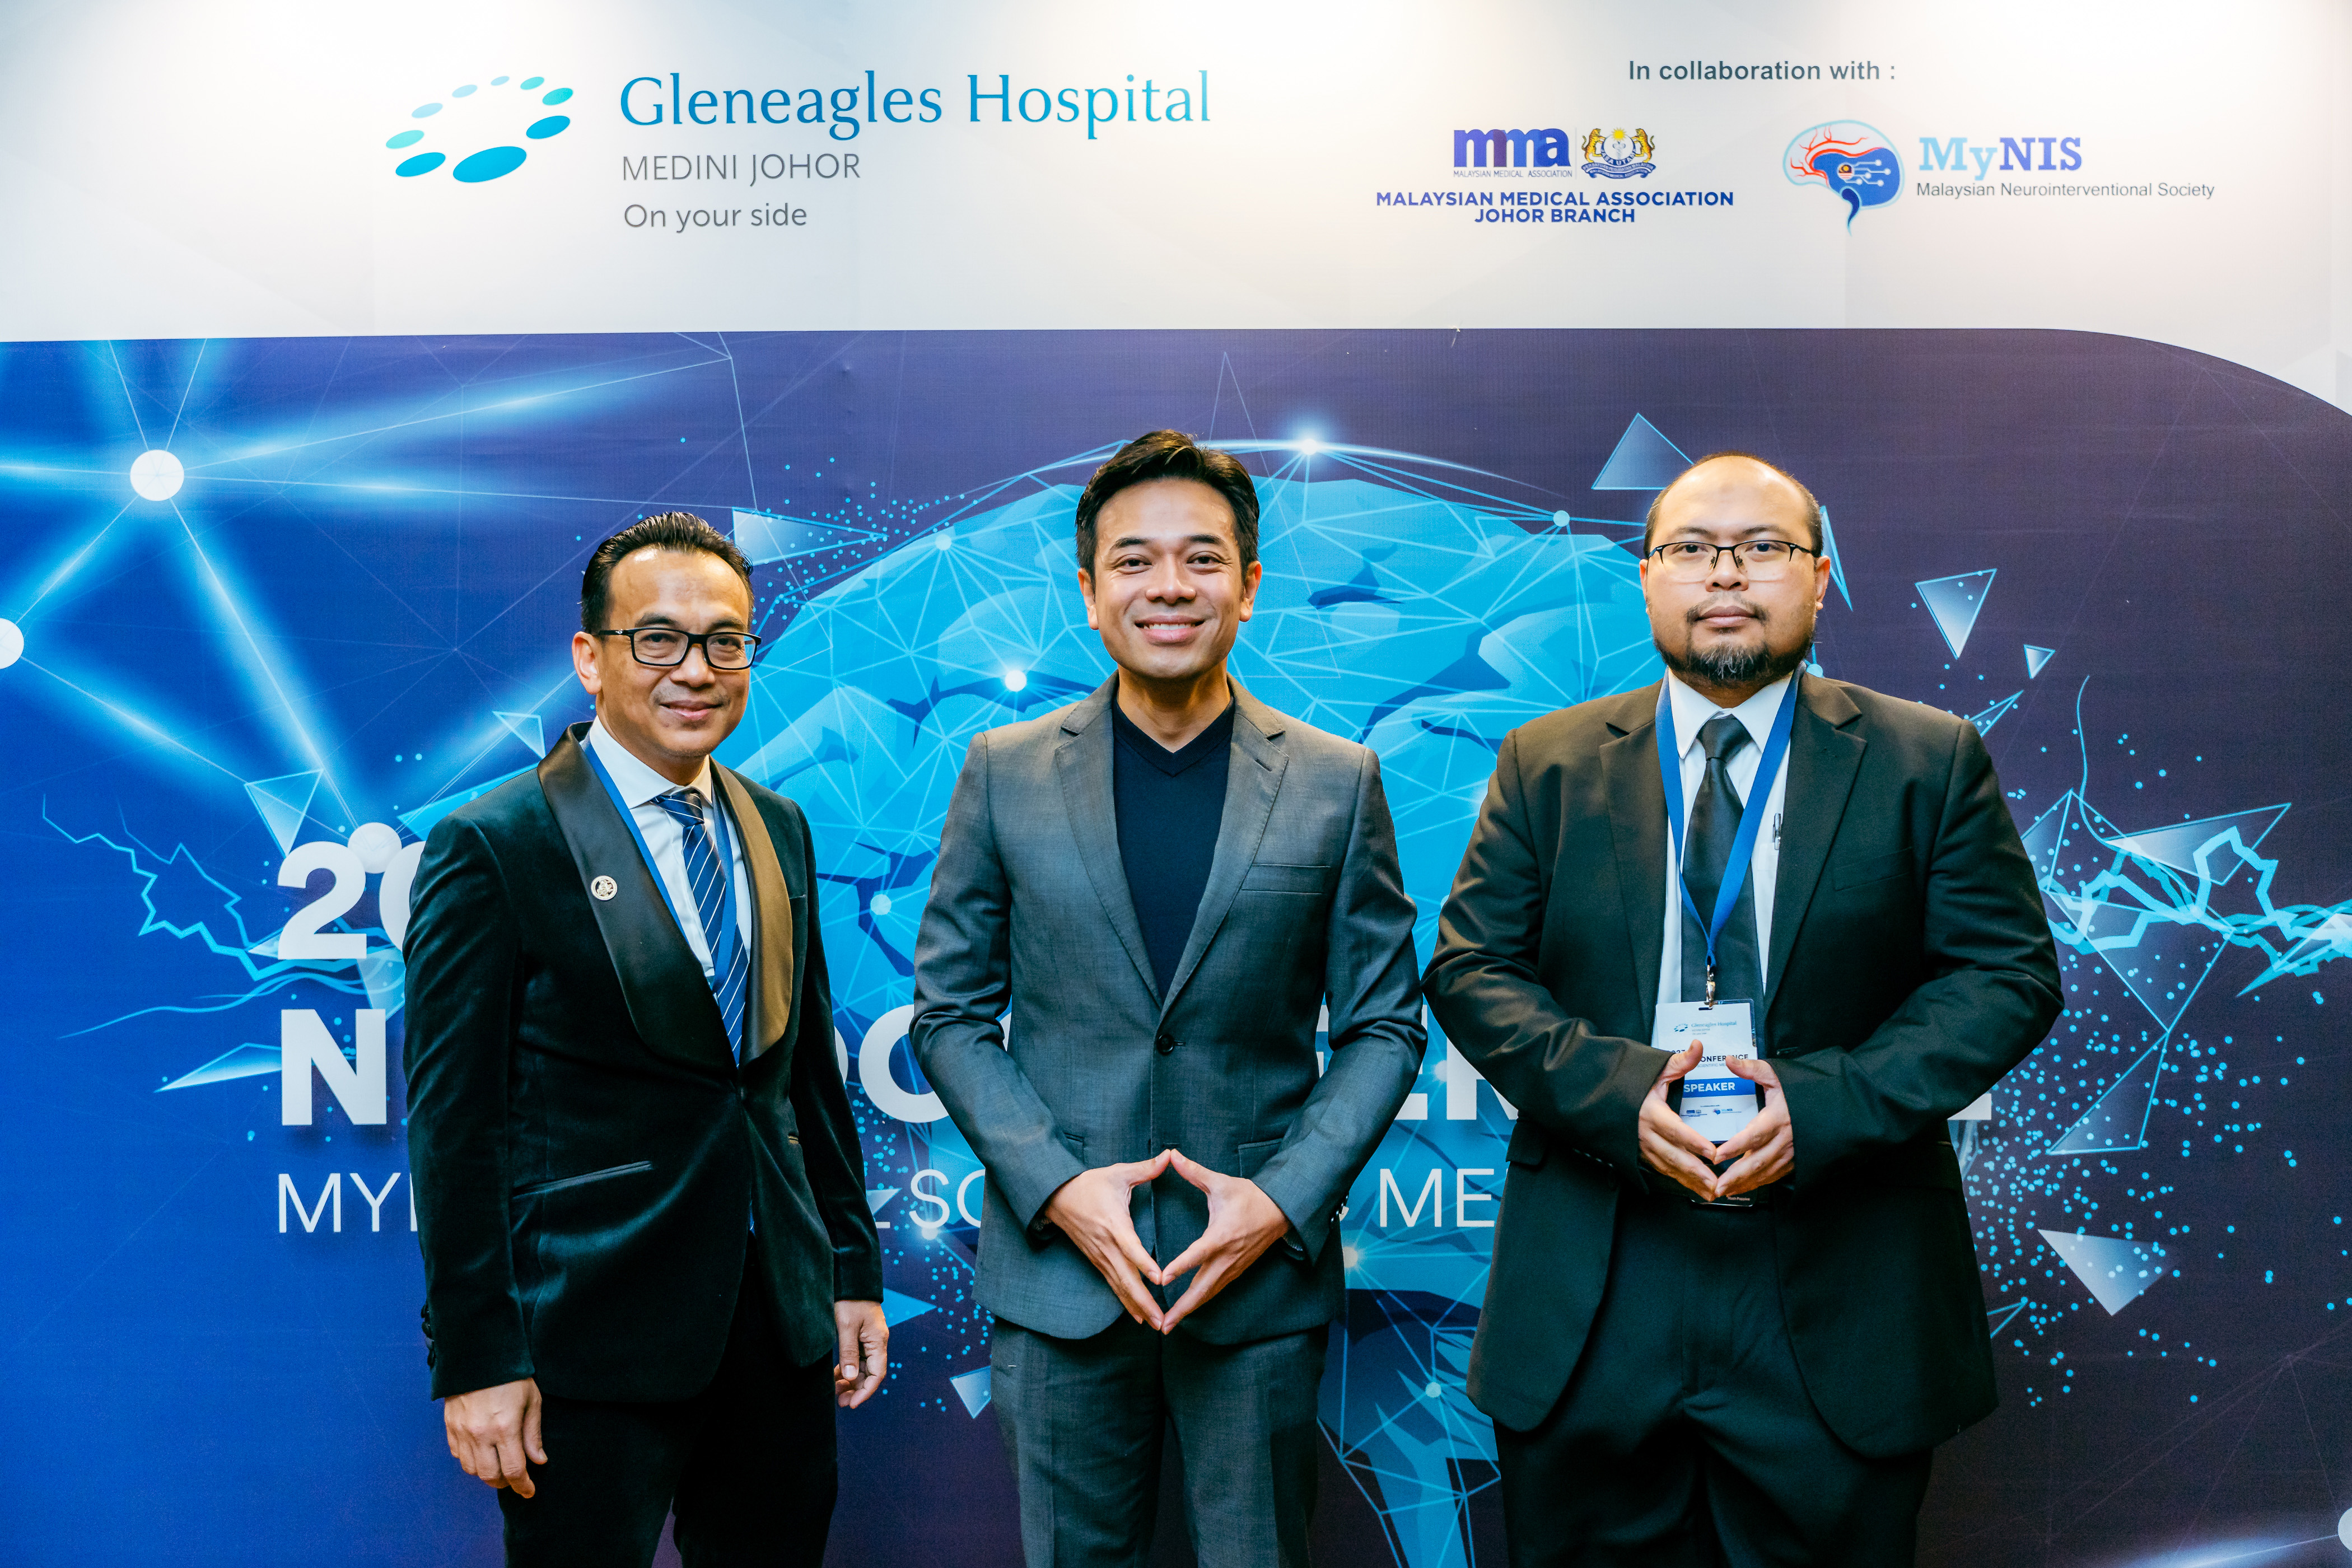 From left to right, Assoc. Prof. Dr. Khairul Azmi Abd Kadir, President of MyNIS, Dr. Kamal Amzan, CEO of Gleneagles Hospital Johor, Dr. Md Yuzairif Md Yusof, Consultant Neurointerventional Radiologist of Gleneagles Hospital Johor.